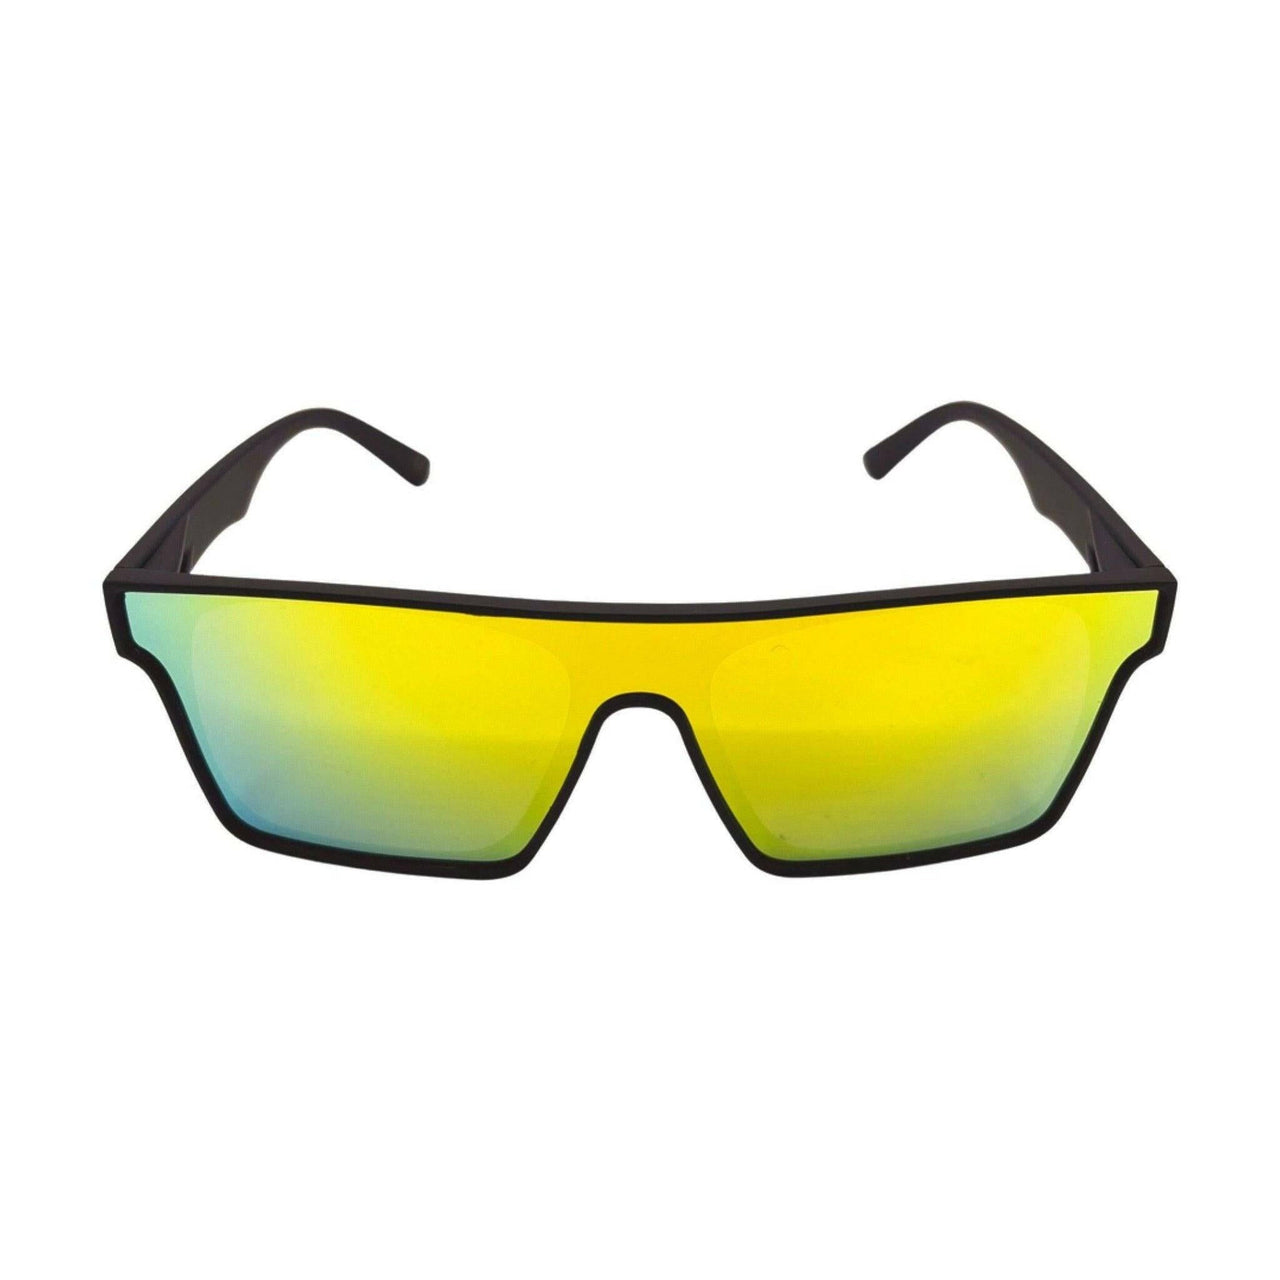 Gold Party Shades Polarized Lens Sunglasses - Rebel Reaper Clothing Company Sunglasses